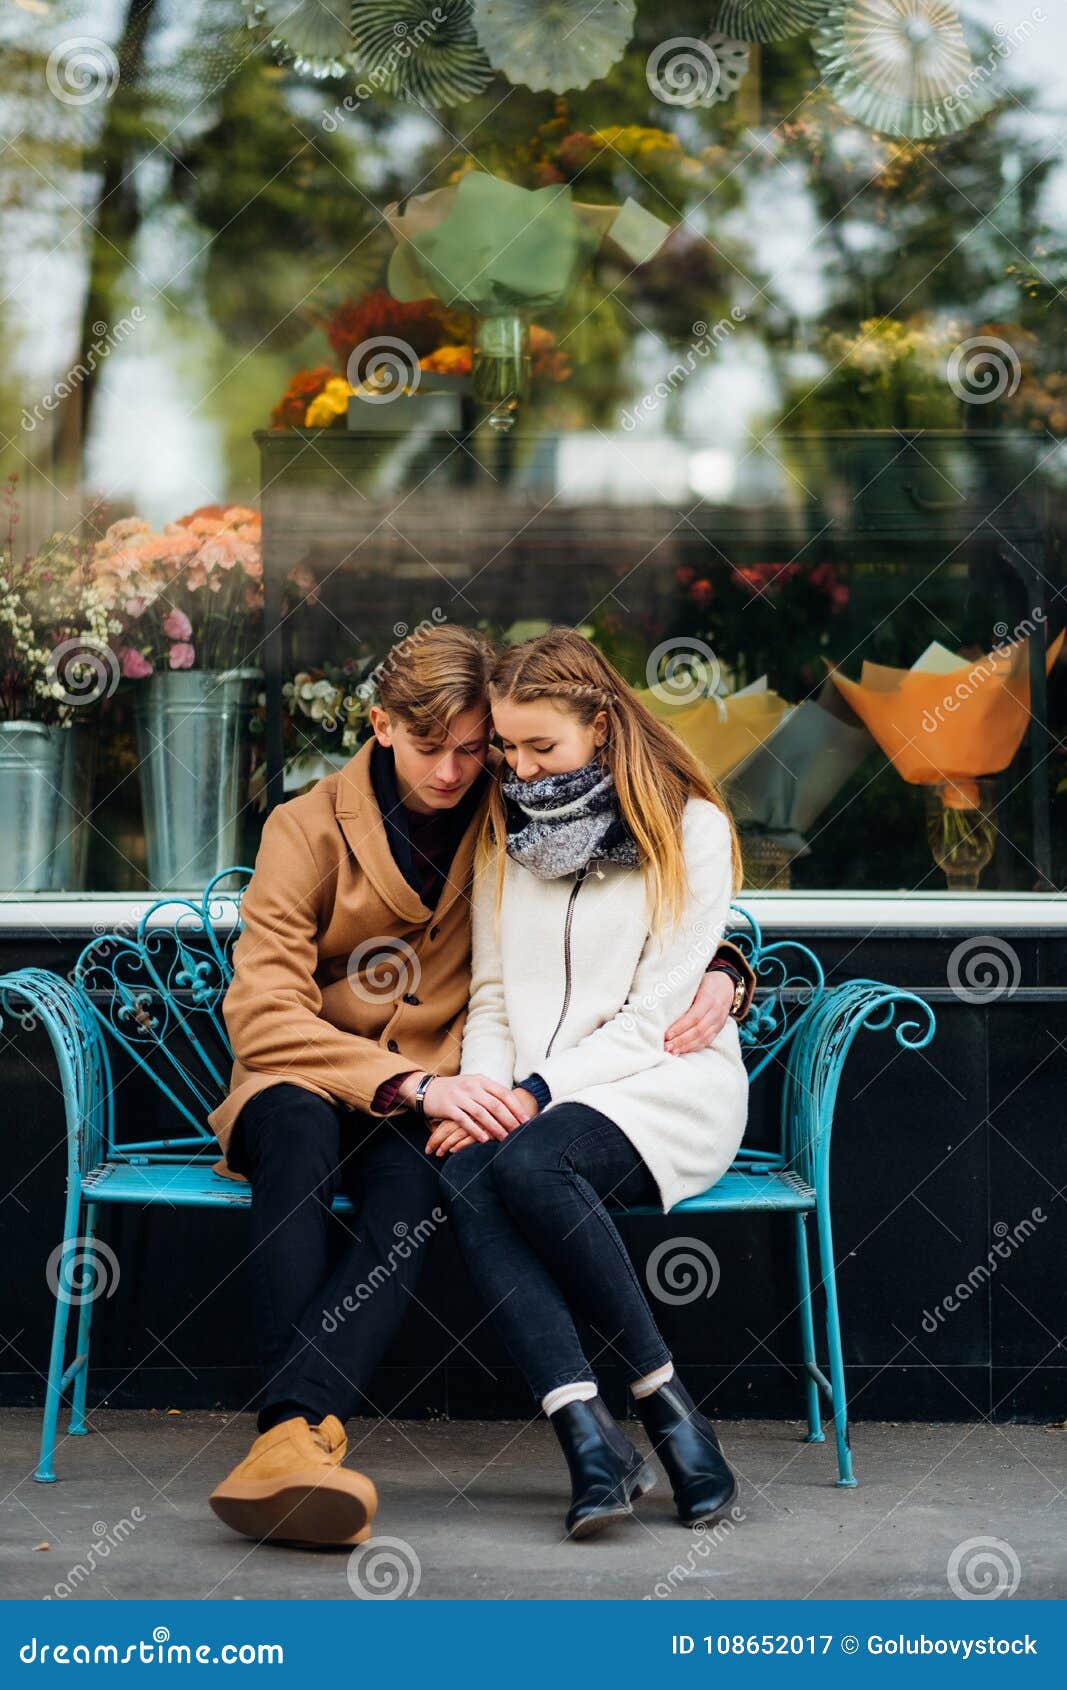 Young Teen Couple Date Hug Sweet Pure Love Romance